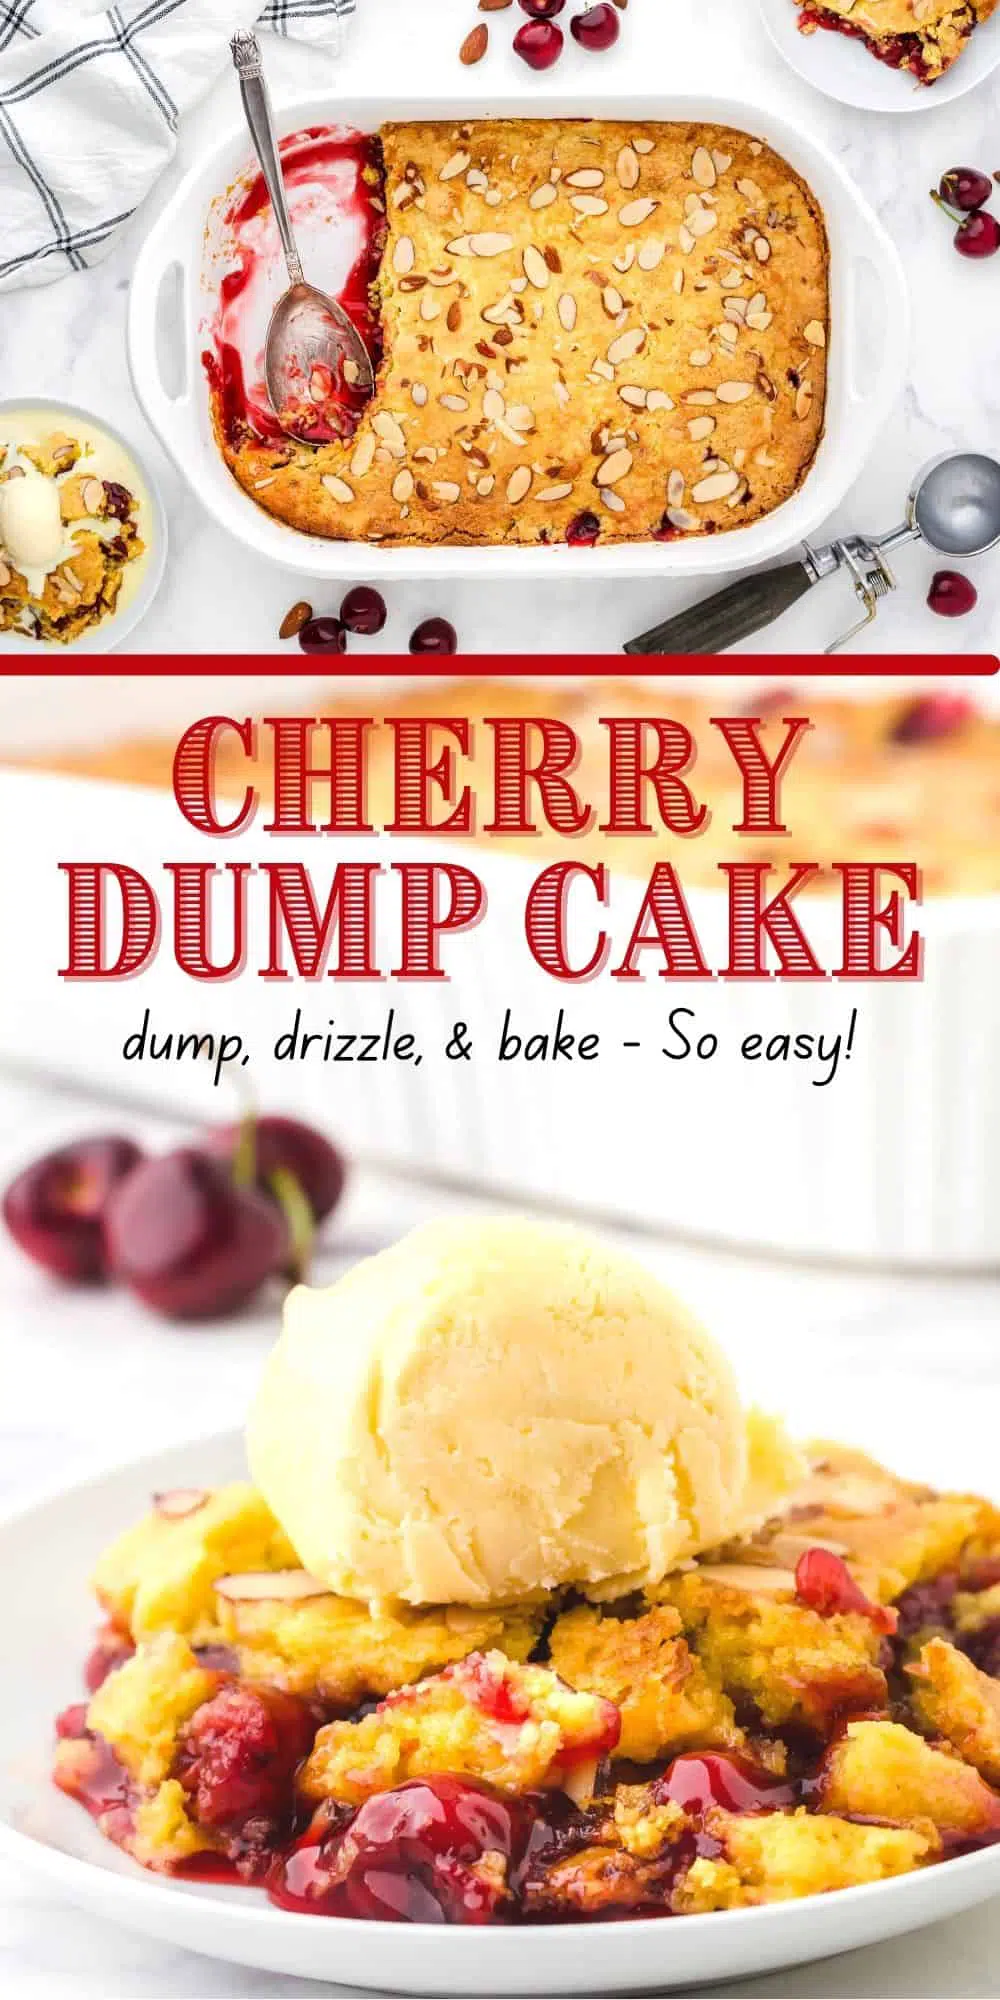 How to Make Cherry Dump Cake Recipe